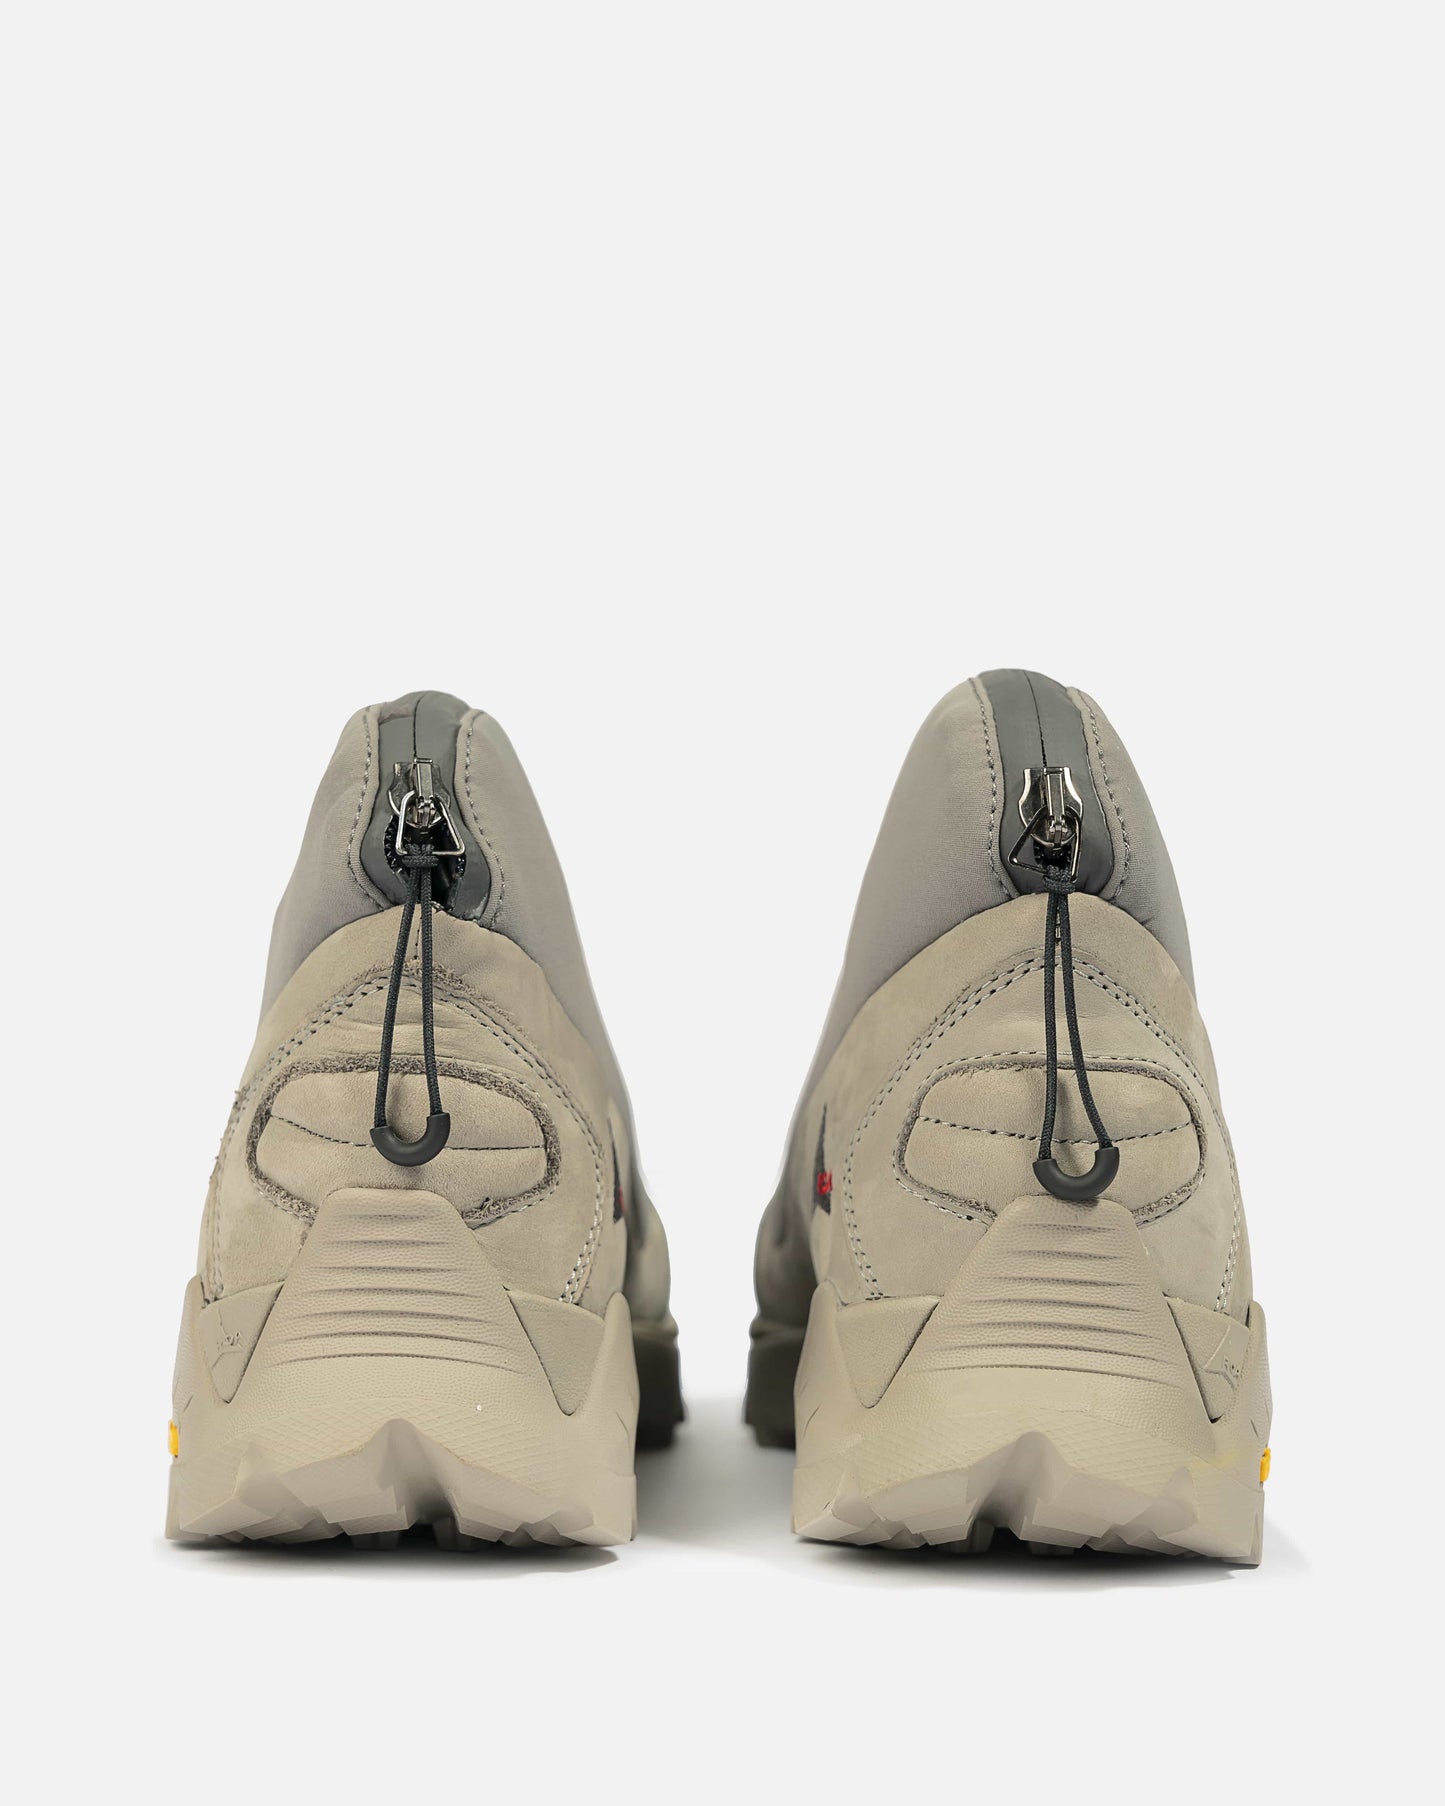 Roa Men's Boots Teri Sneakers in Grey